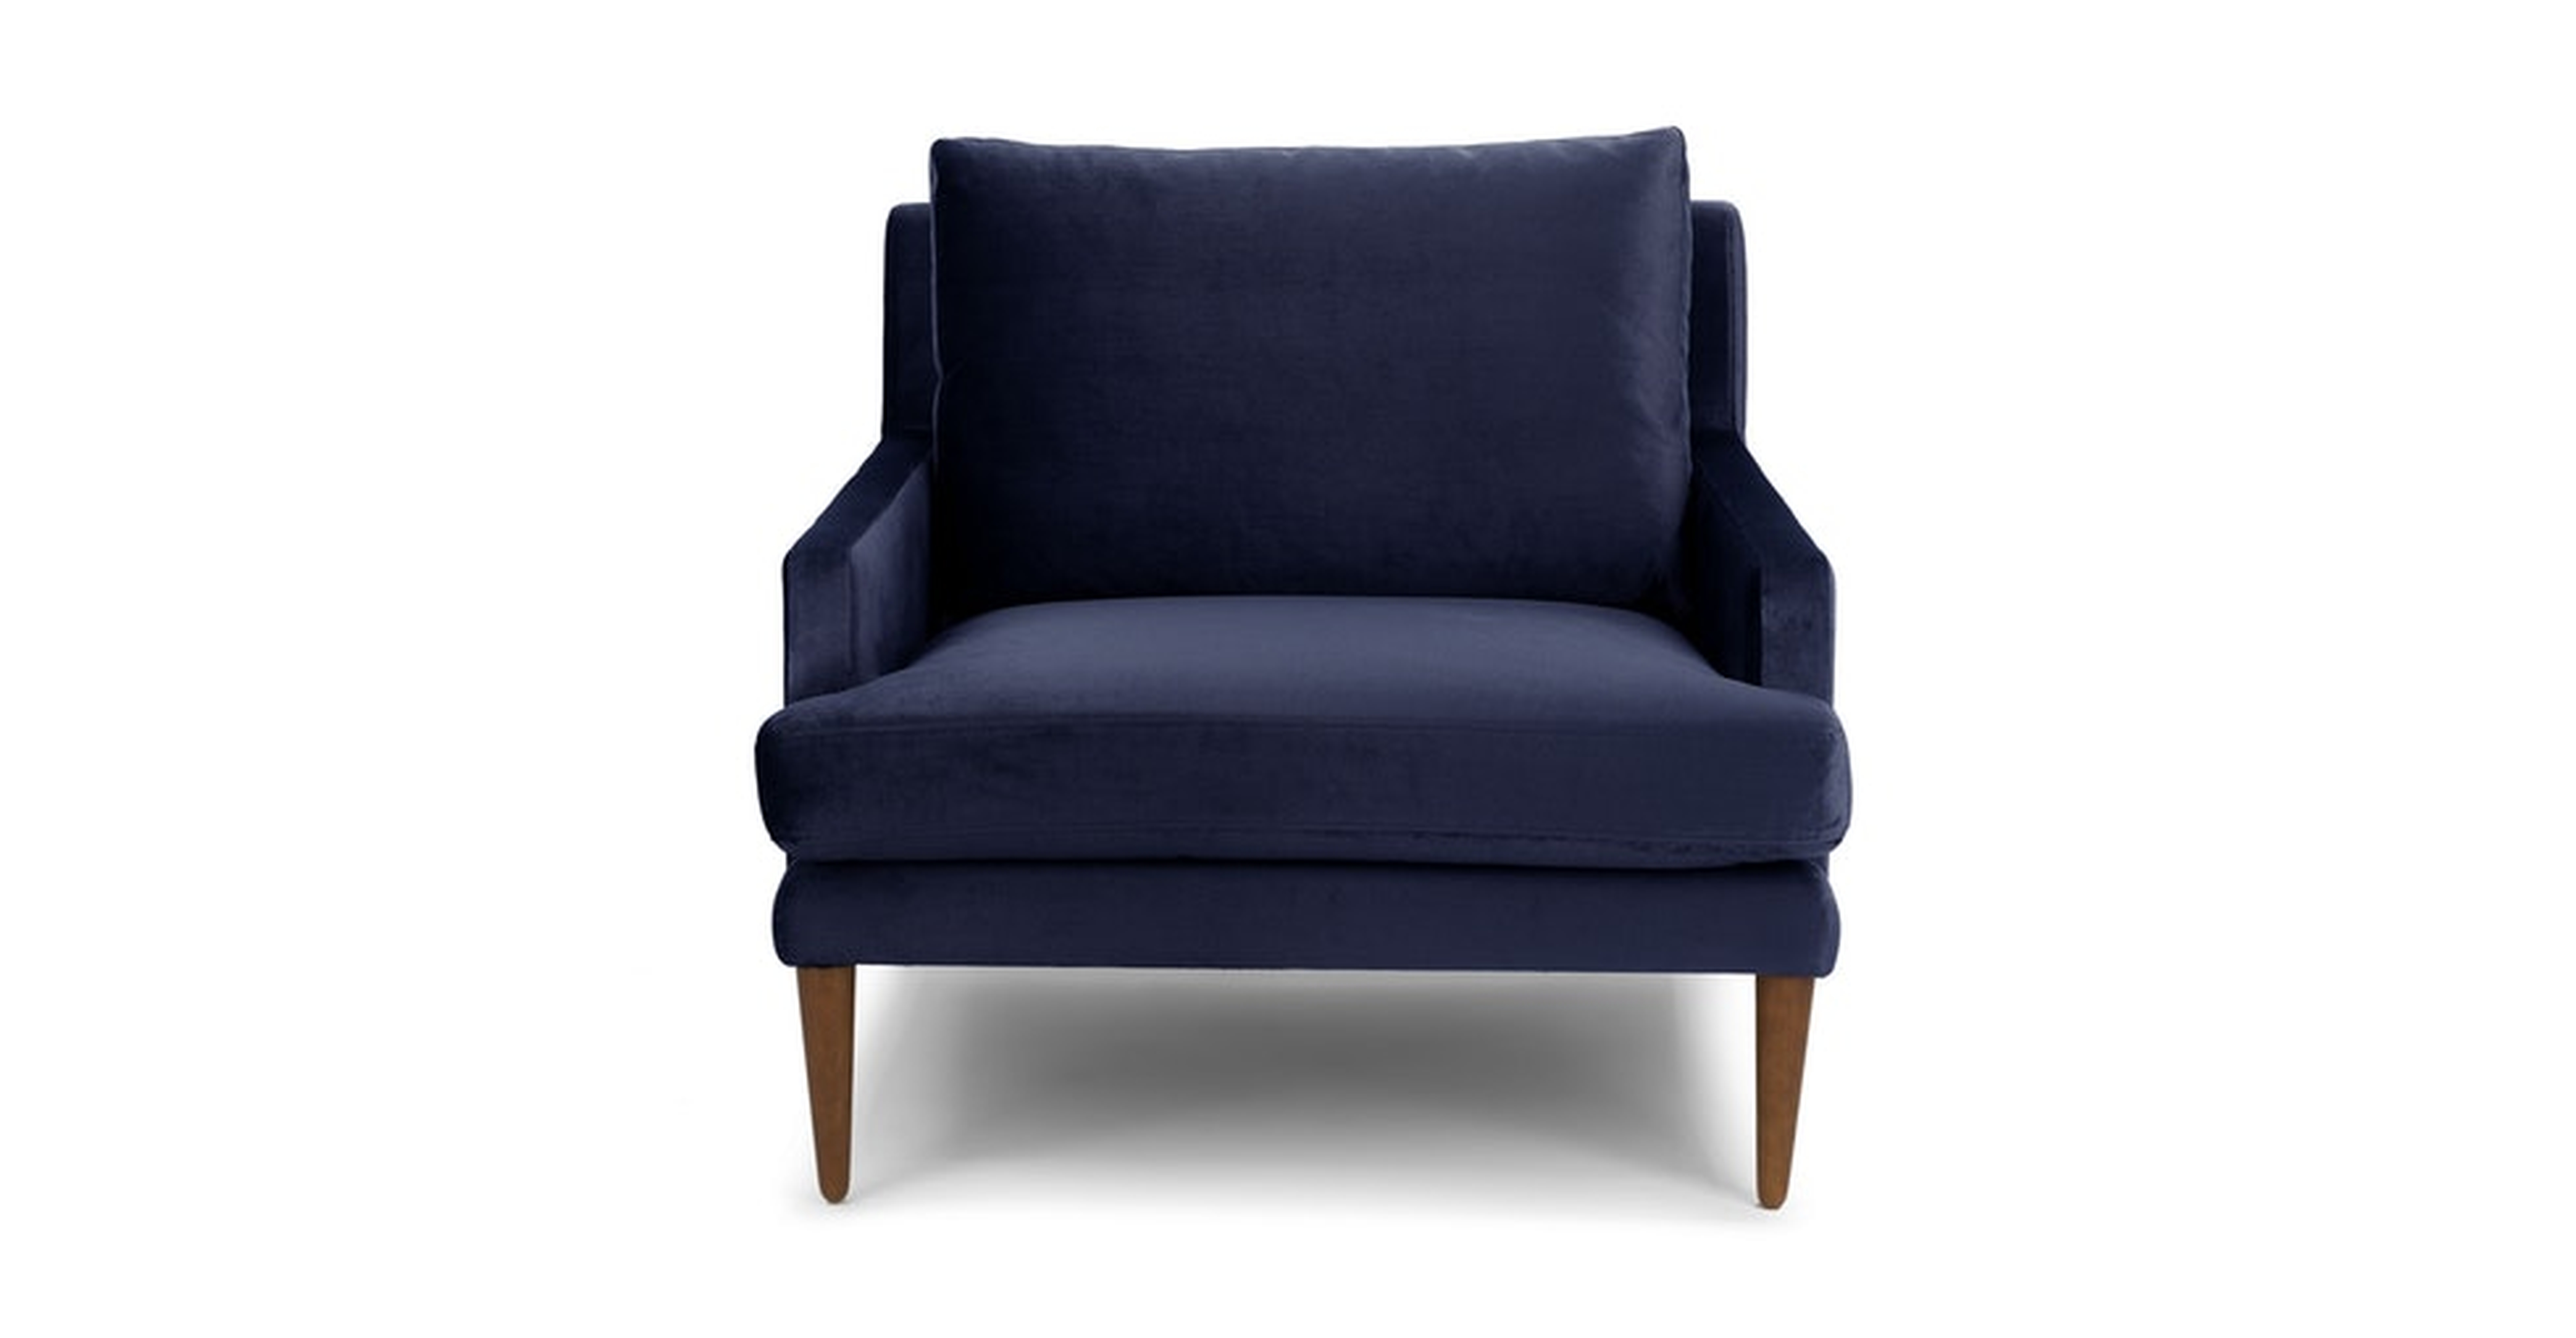 Luxu Nightshade Blue Chair - Article